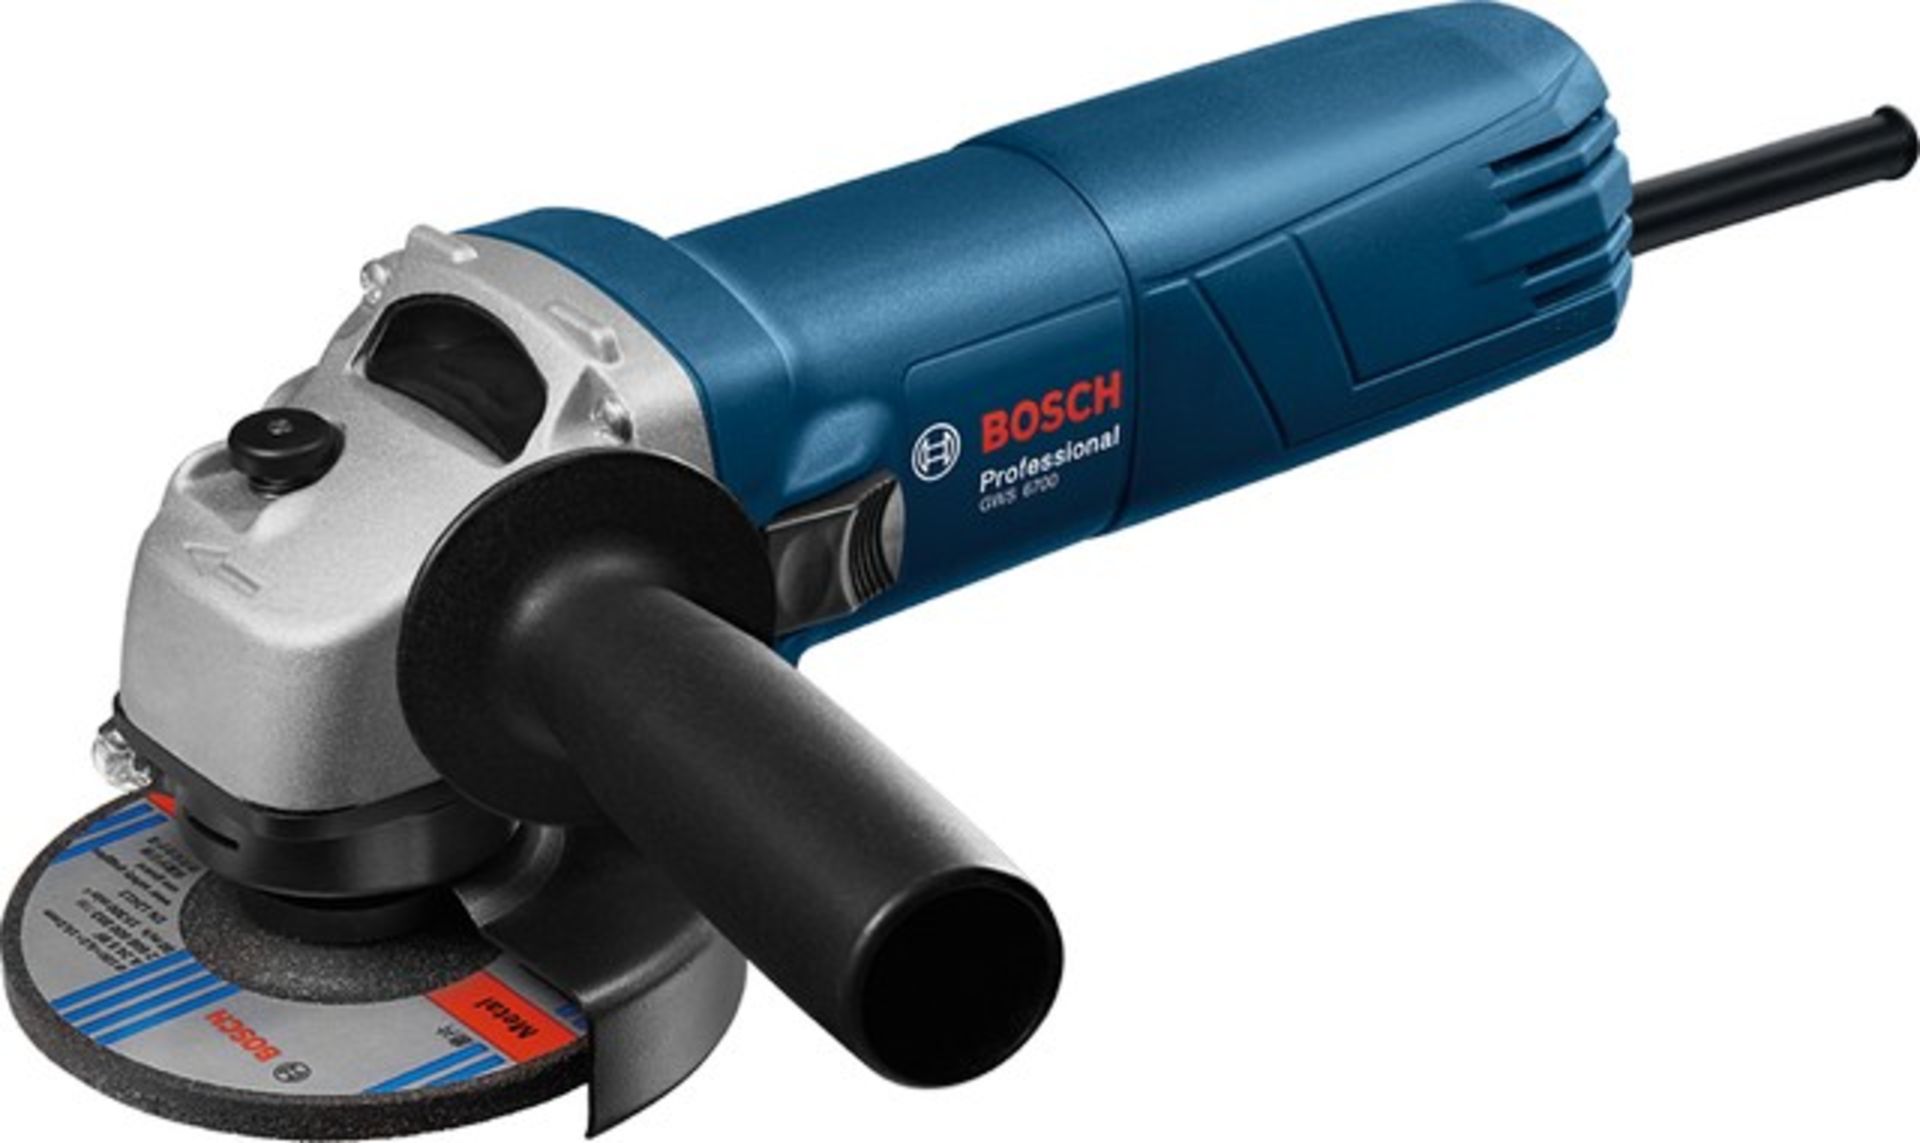 V Brand New Bosch Professional 6700 Mini Grinder/Cutter 240v (Similar) Amazon Price - £52.00 (